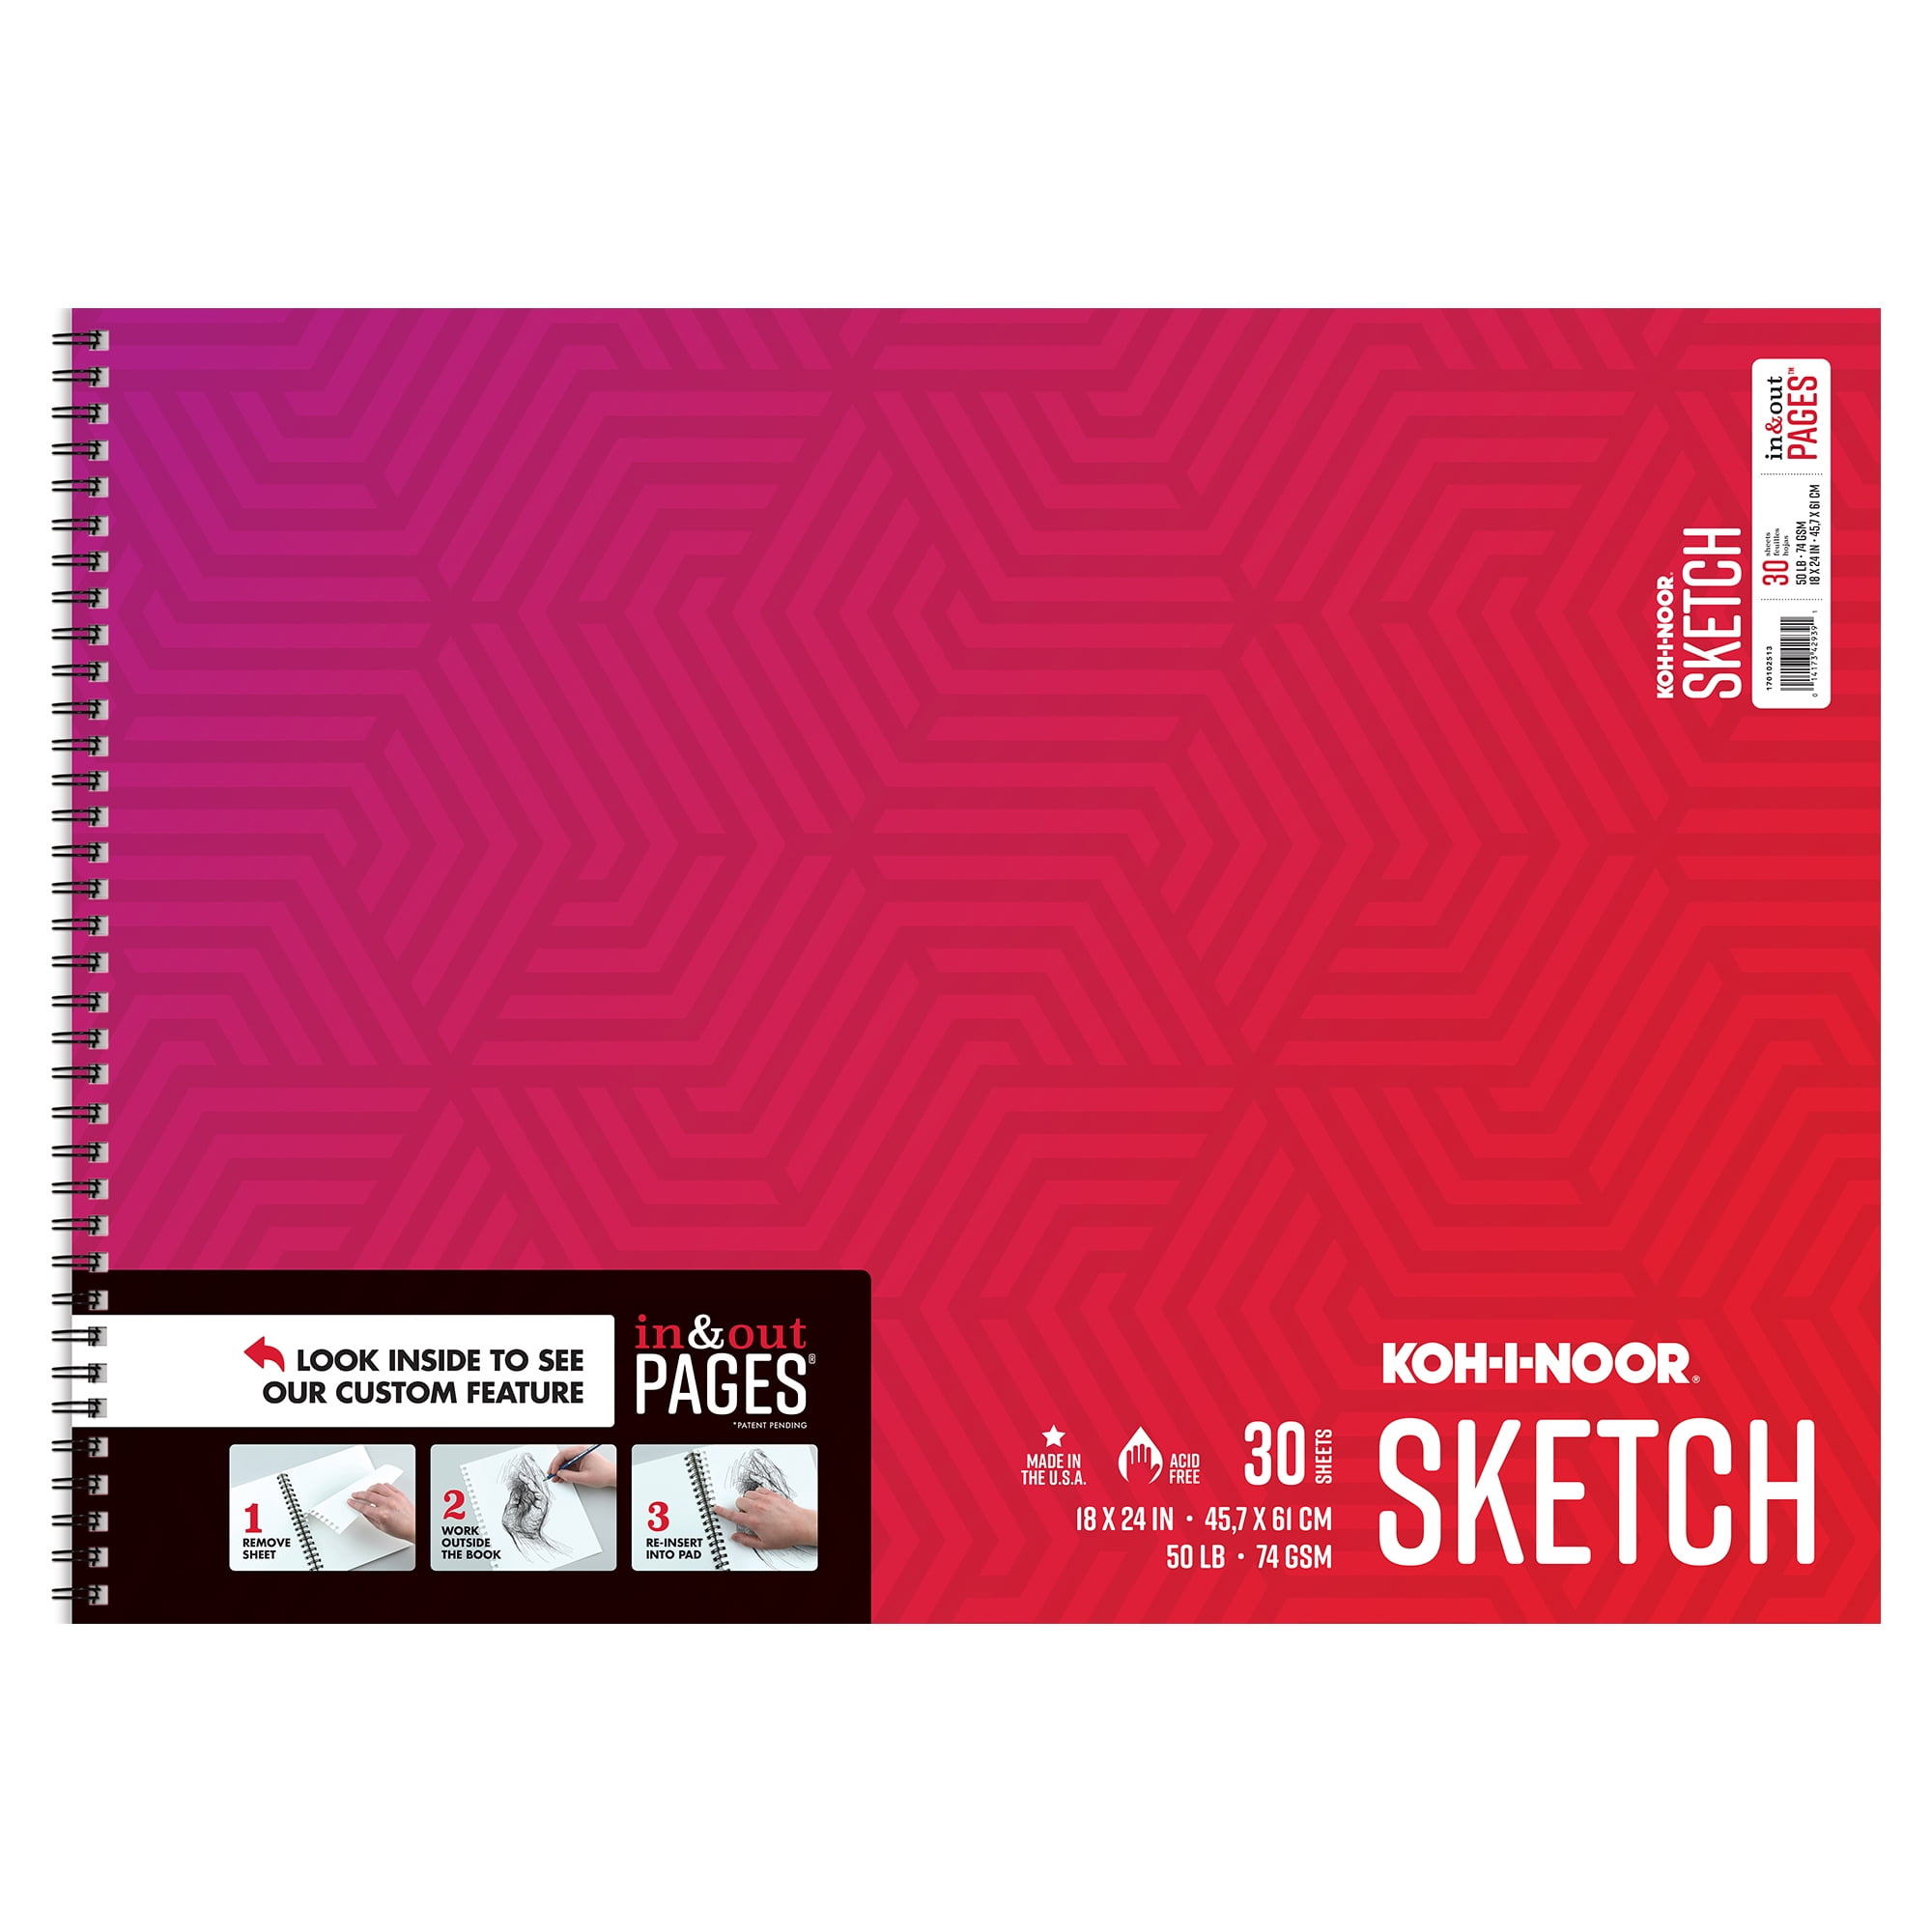 Norberg & Linden Sketch Pad Premium 100 Sheets 60 lbs High Quality J0